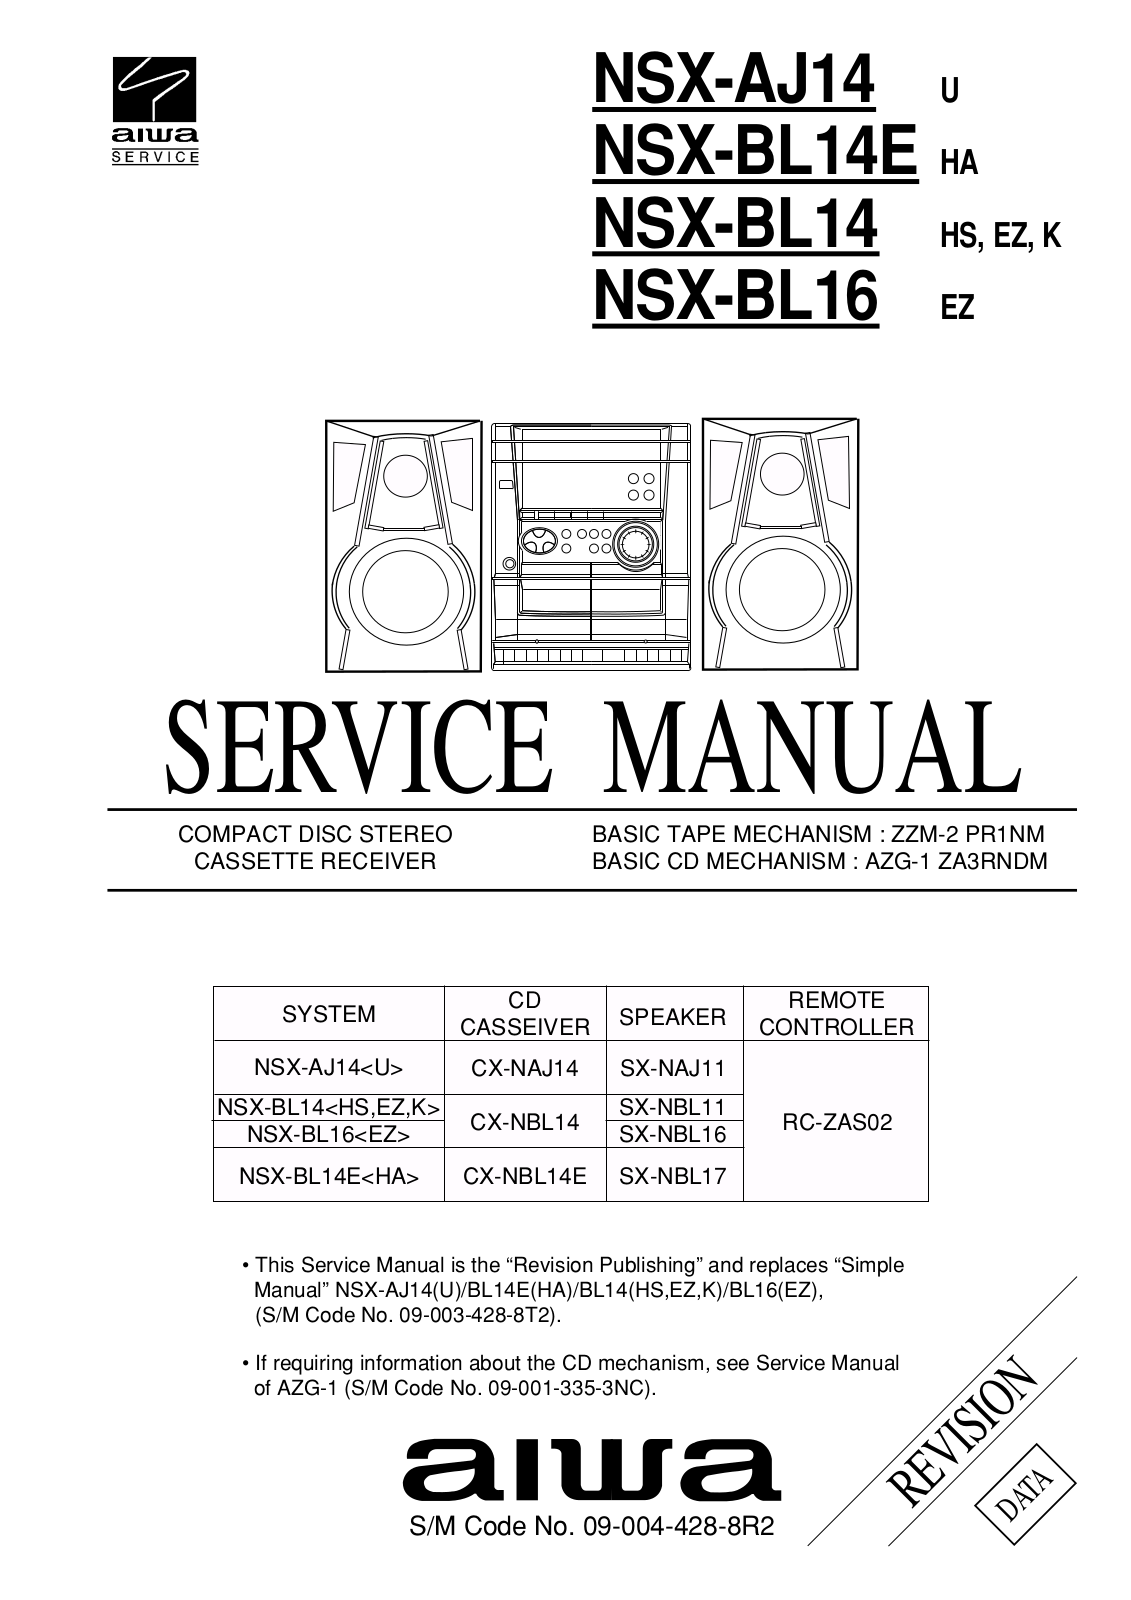 Aiwa NSXAJ-14, NSXBL-14-E, NSXBL-14, NSXBL-16 Service manual